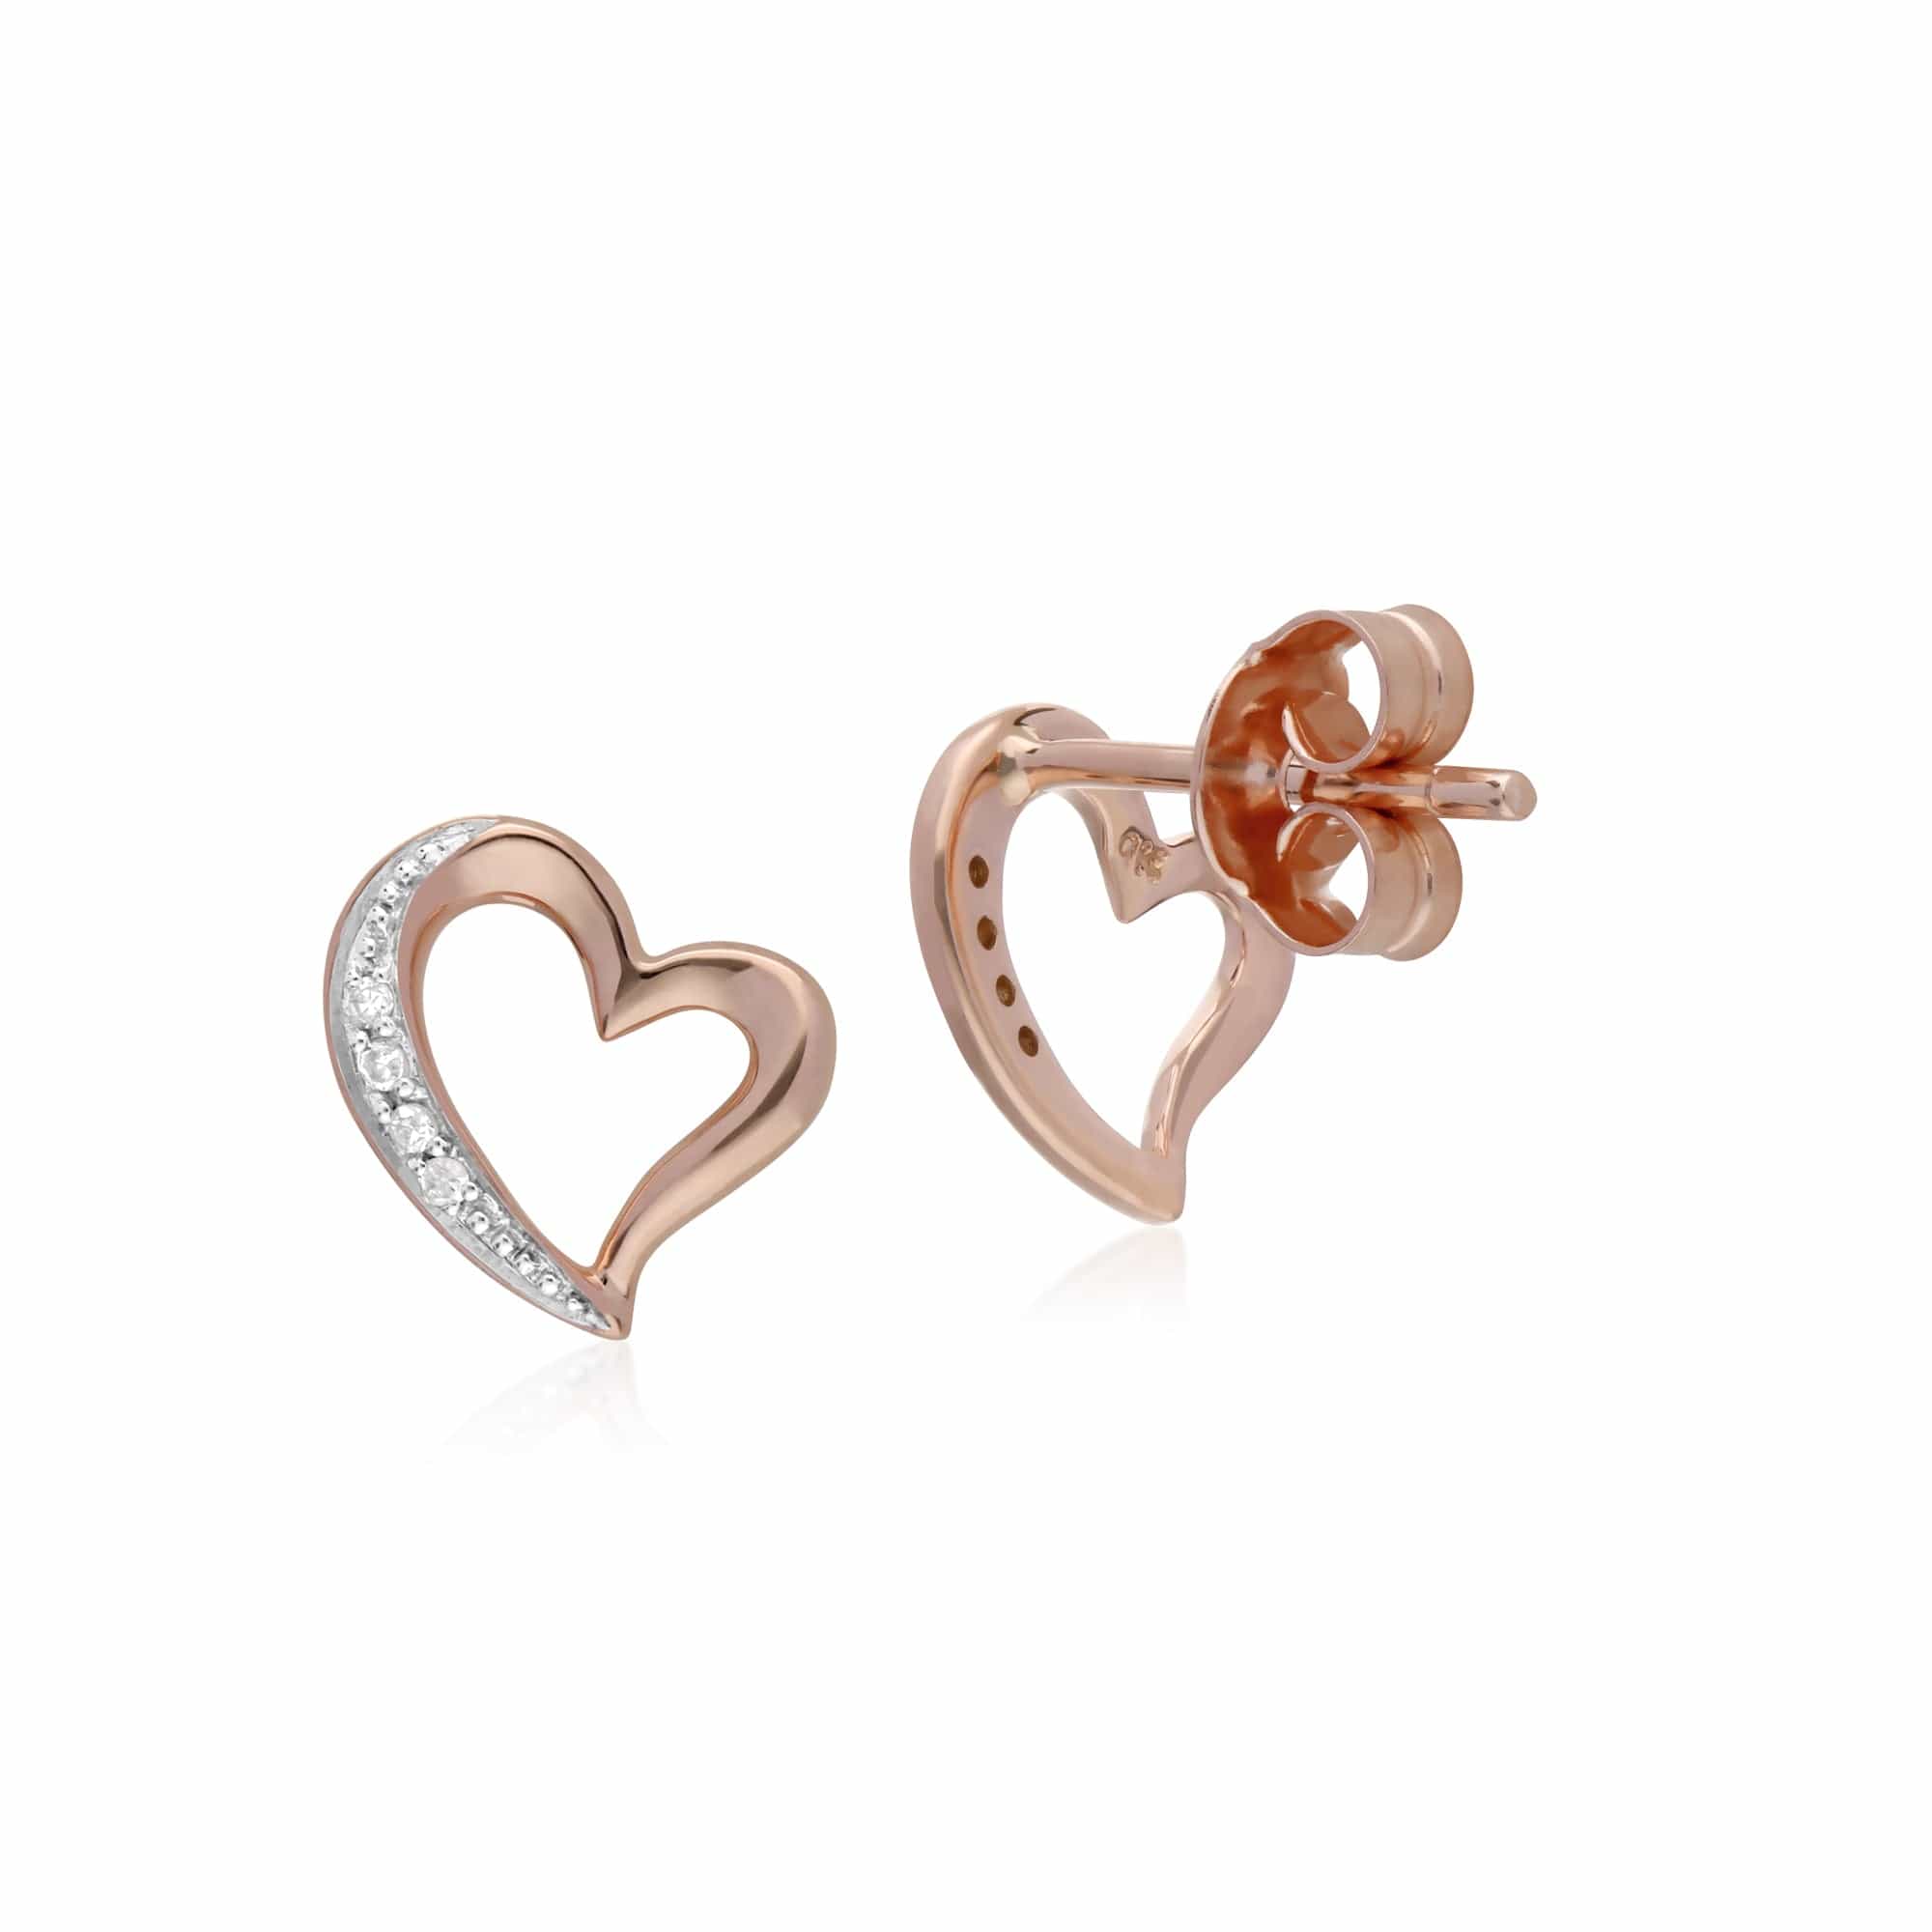 Classic Round Diamond Open Love Heart Stud Earrings in 9ct Rose Gold - Gemondo